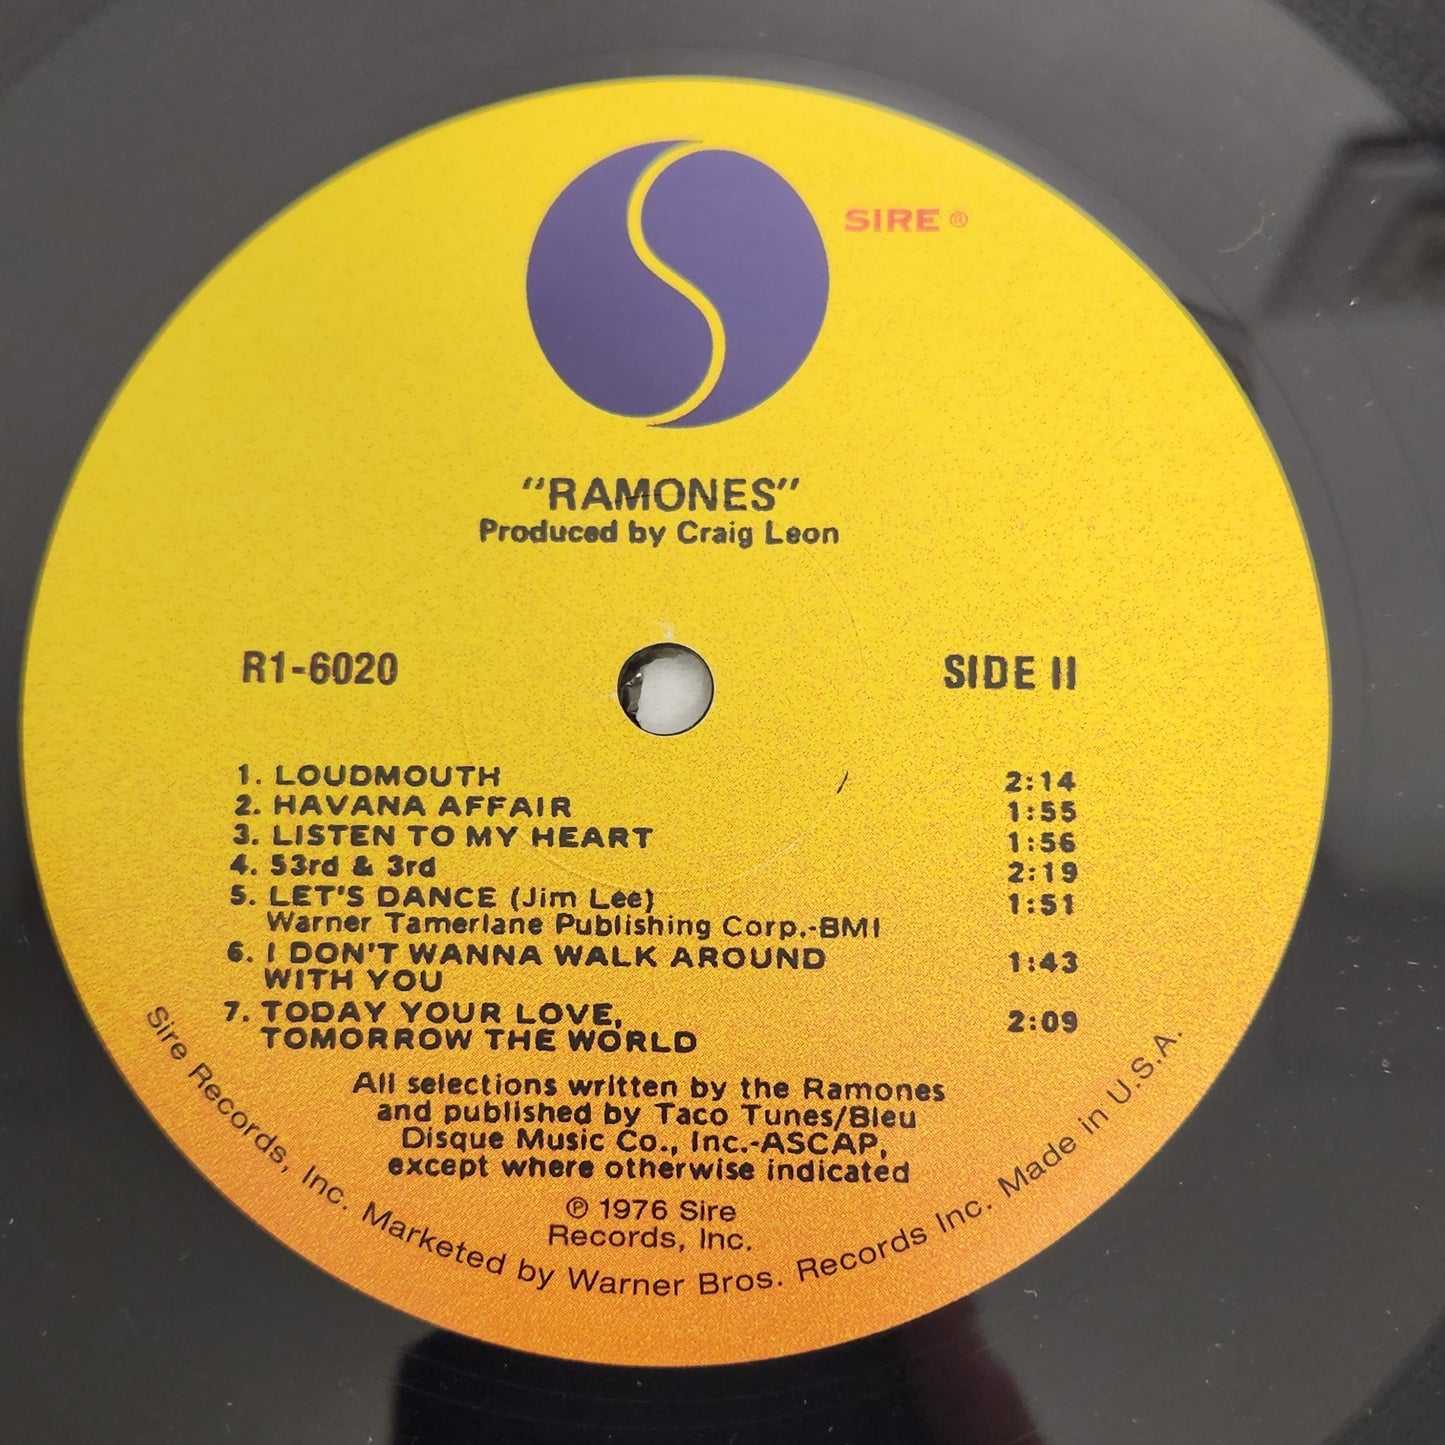 Ramones Self-Titled 2011 Reissue Punk Rock Record Album